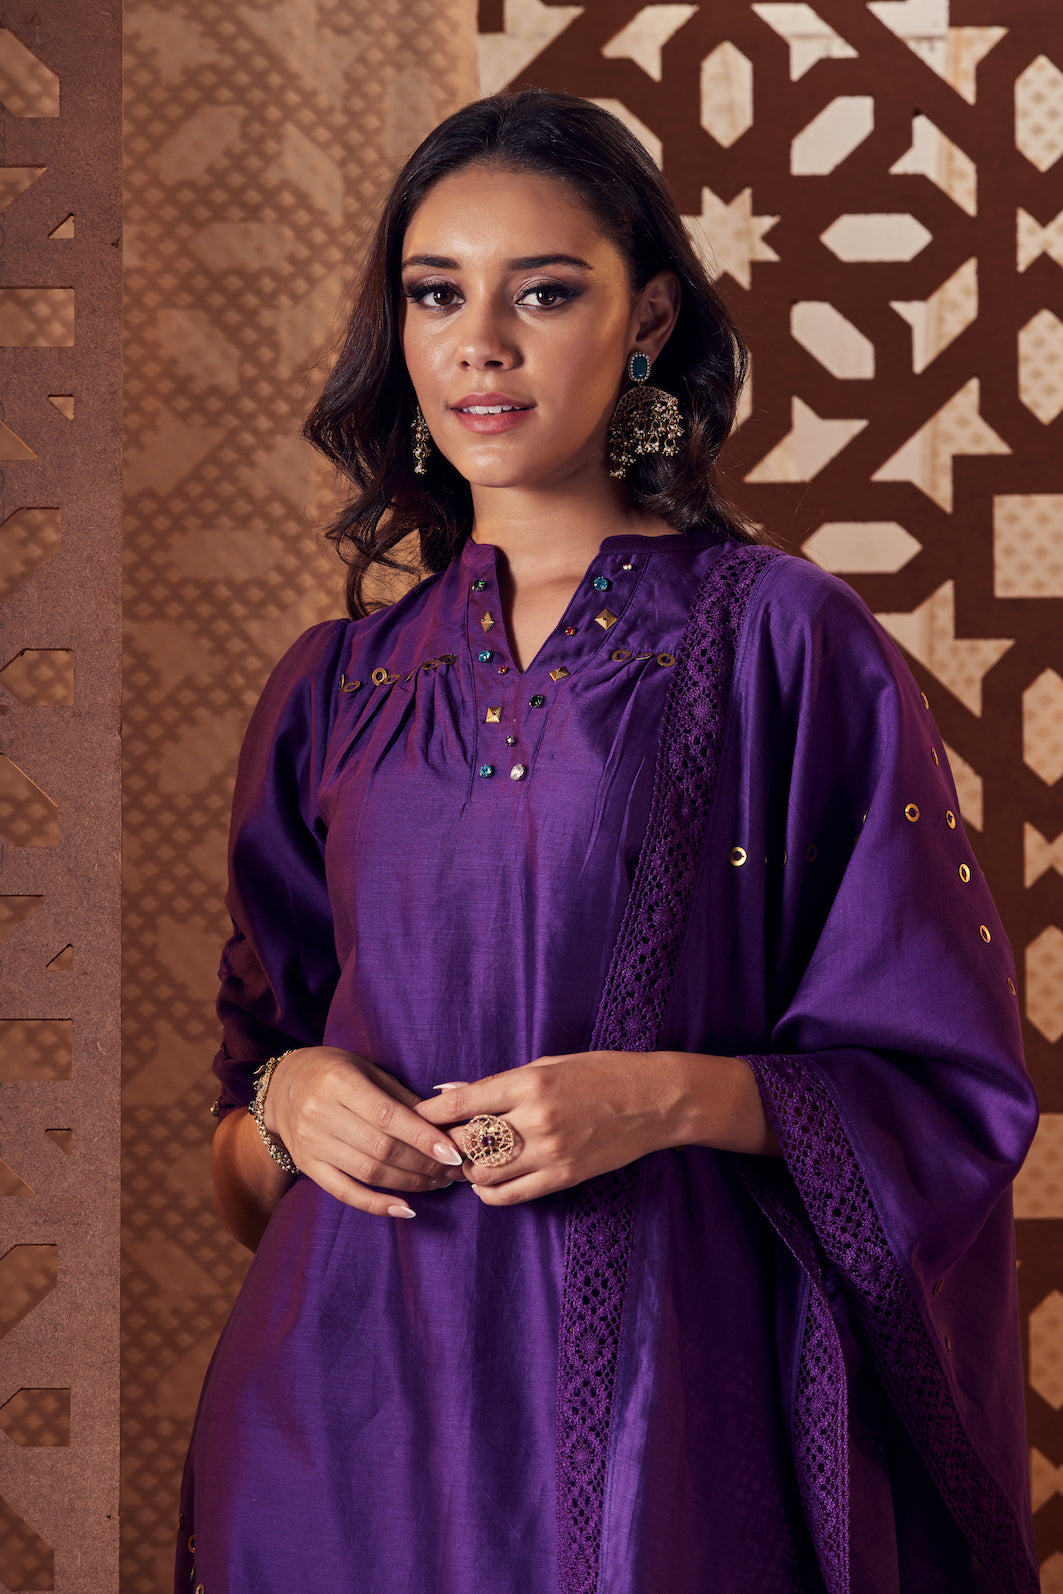 Chanderi A-Line Kurta - Set of 3 at Kamakhyaa by Charkhee. This item is Chanderi, Cotton, Embroidered, Ethnic Wear, Indian Wear, Kurta Palazzo Sets, Naayaab, Natural, Nayaab, Purple, Relaxed Fit, Wedding Gifts, Womenswear